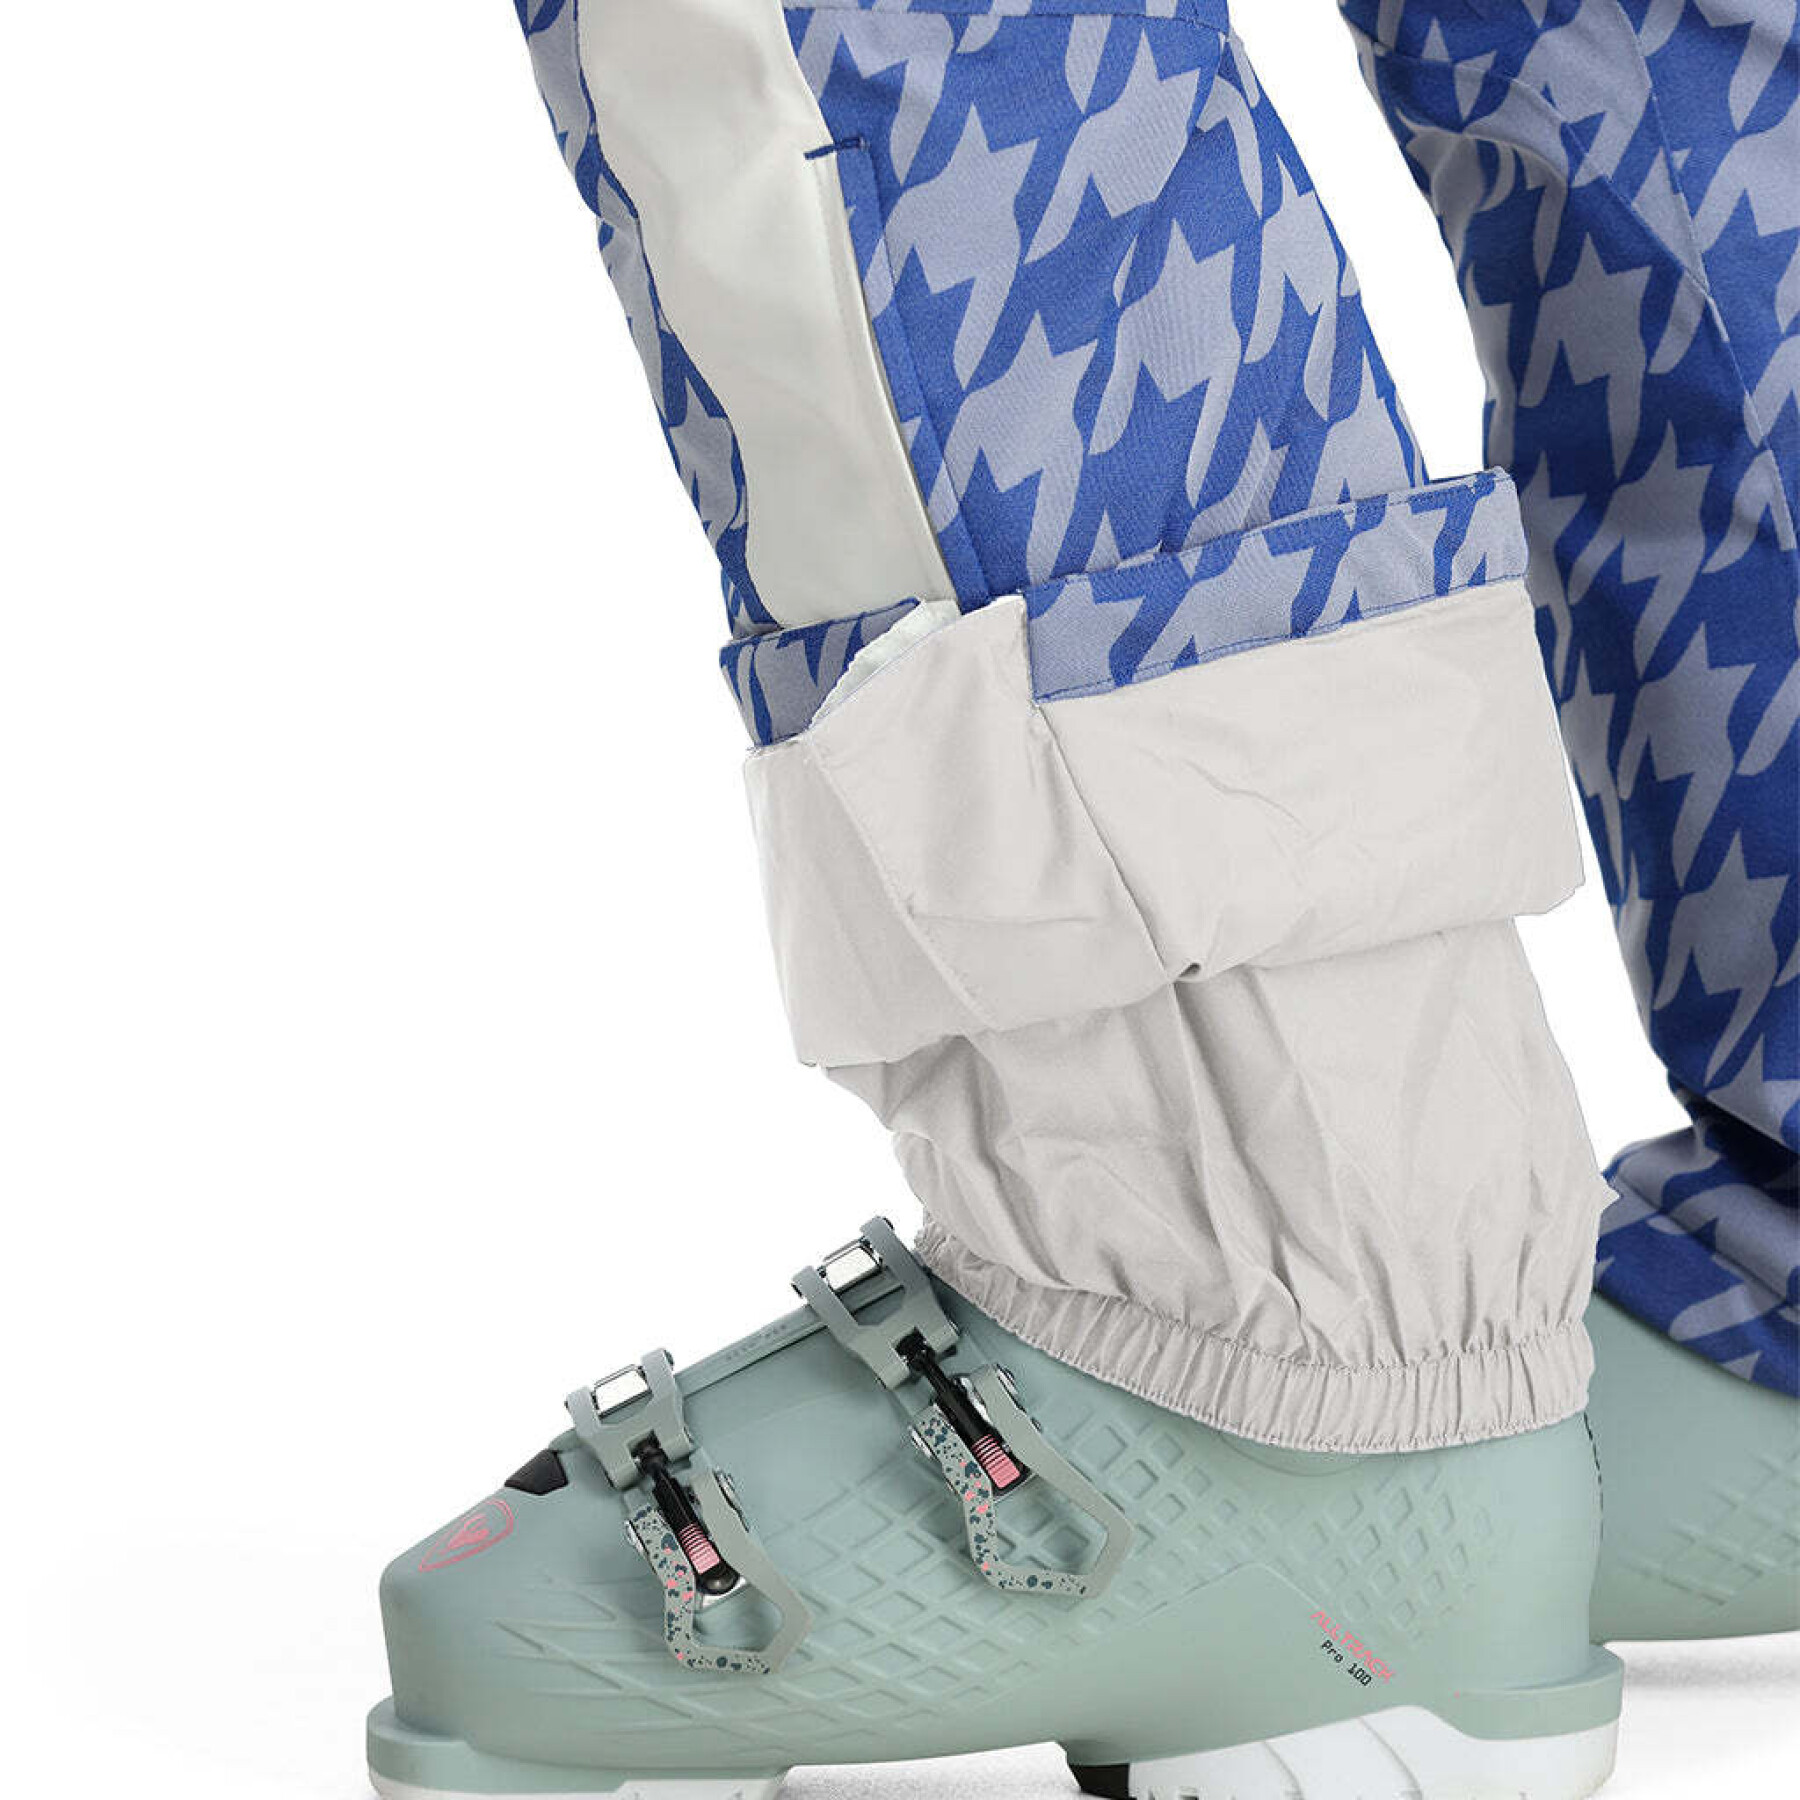 Women's ski pants Spyder Echo